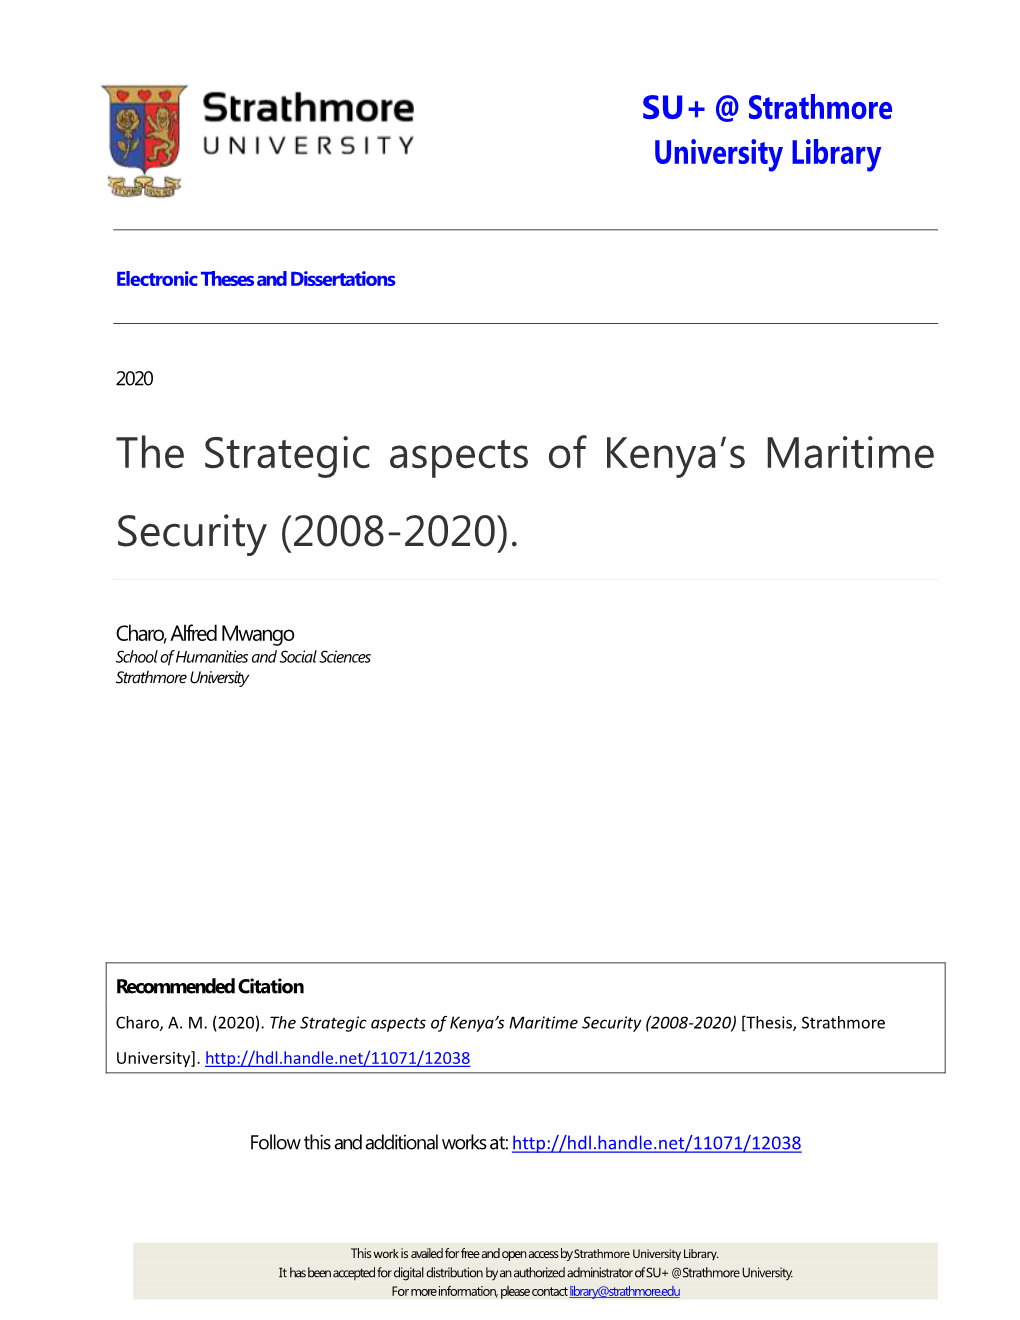 The Strategic Aspects of Kenya's Maritime Security (2008-2020)